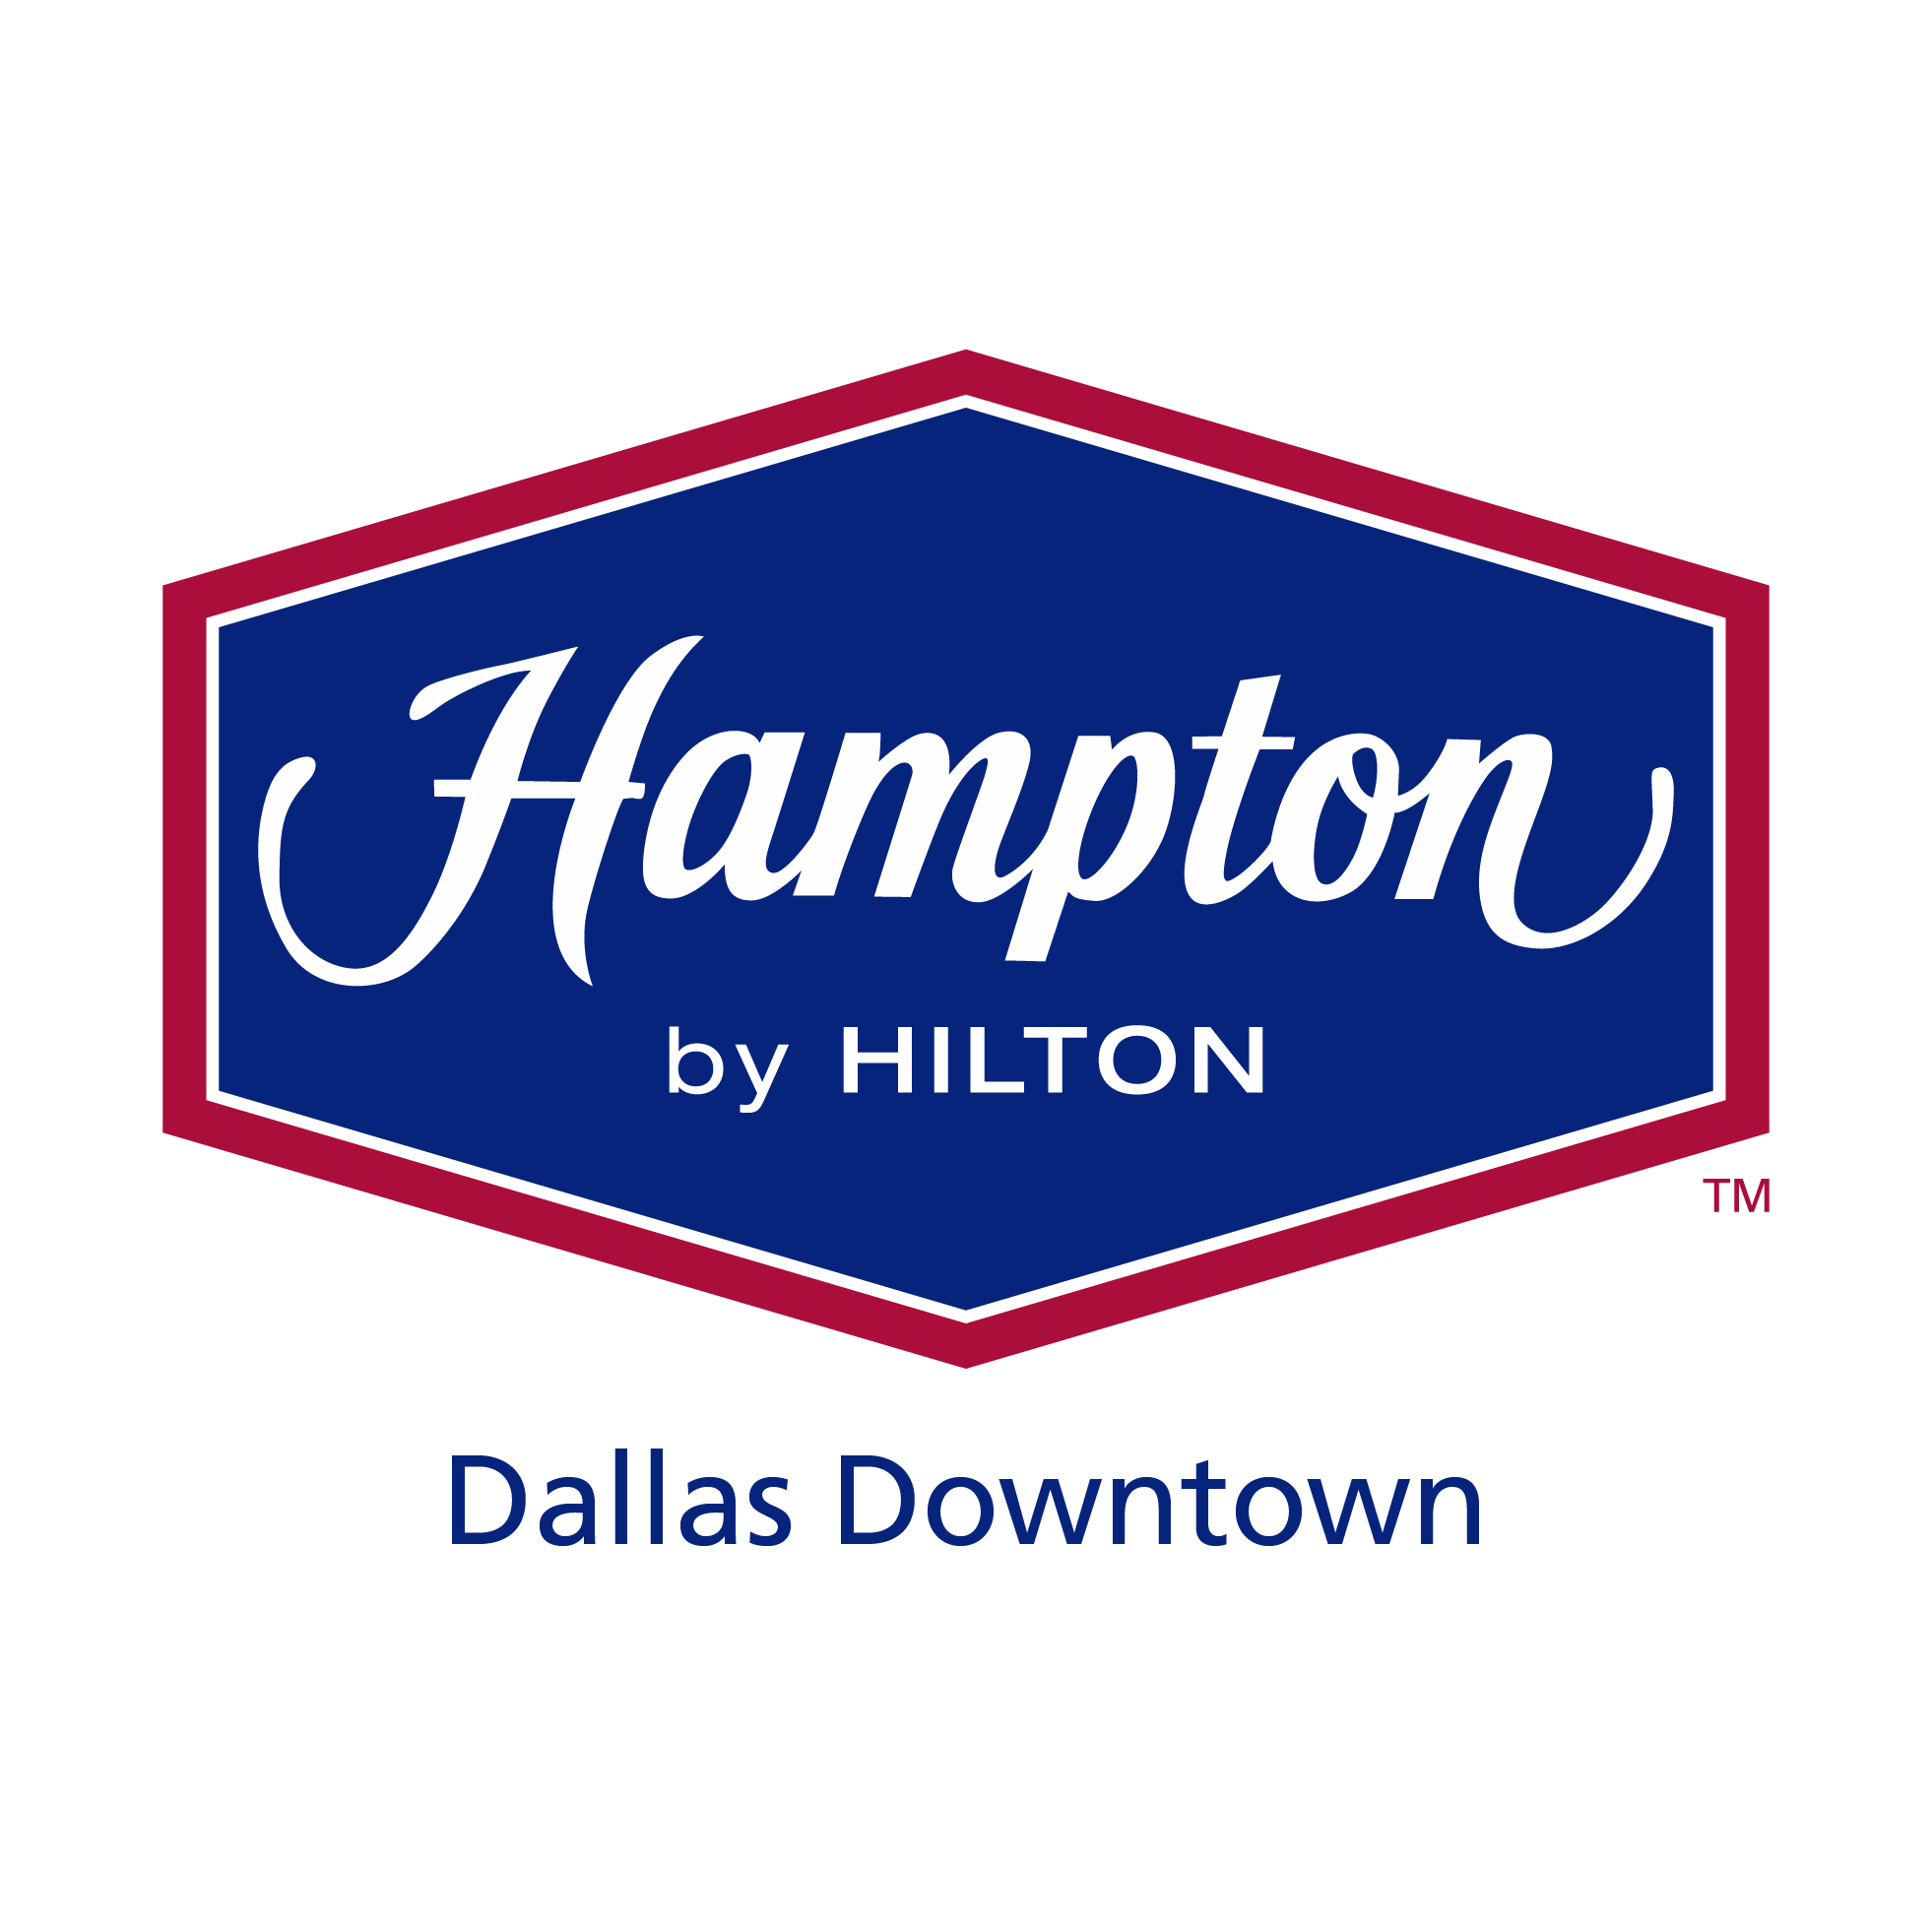 Hampton Inn & Suites Dallas Downtown - Dallas, TX 75201 - (214)290-9090 | ShowMeLocal.com